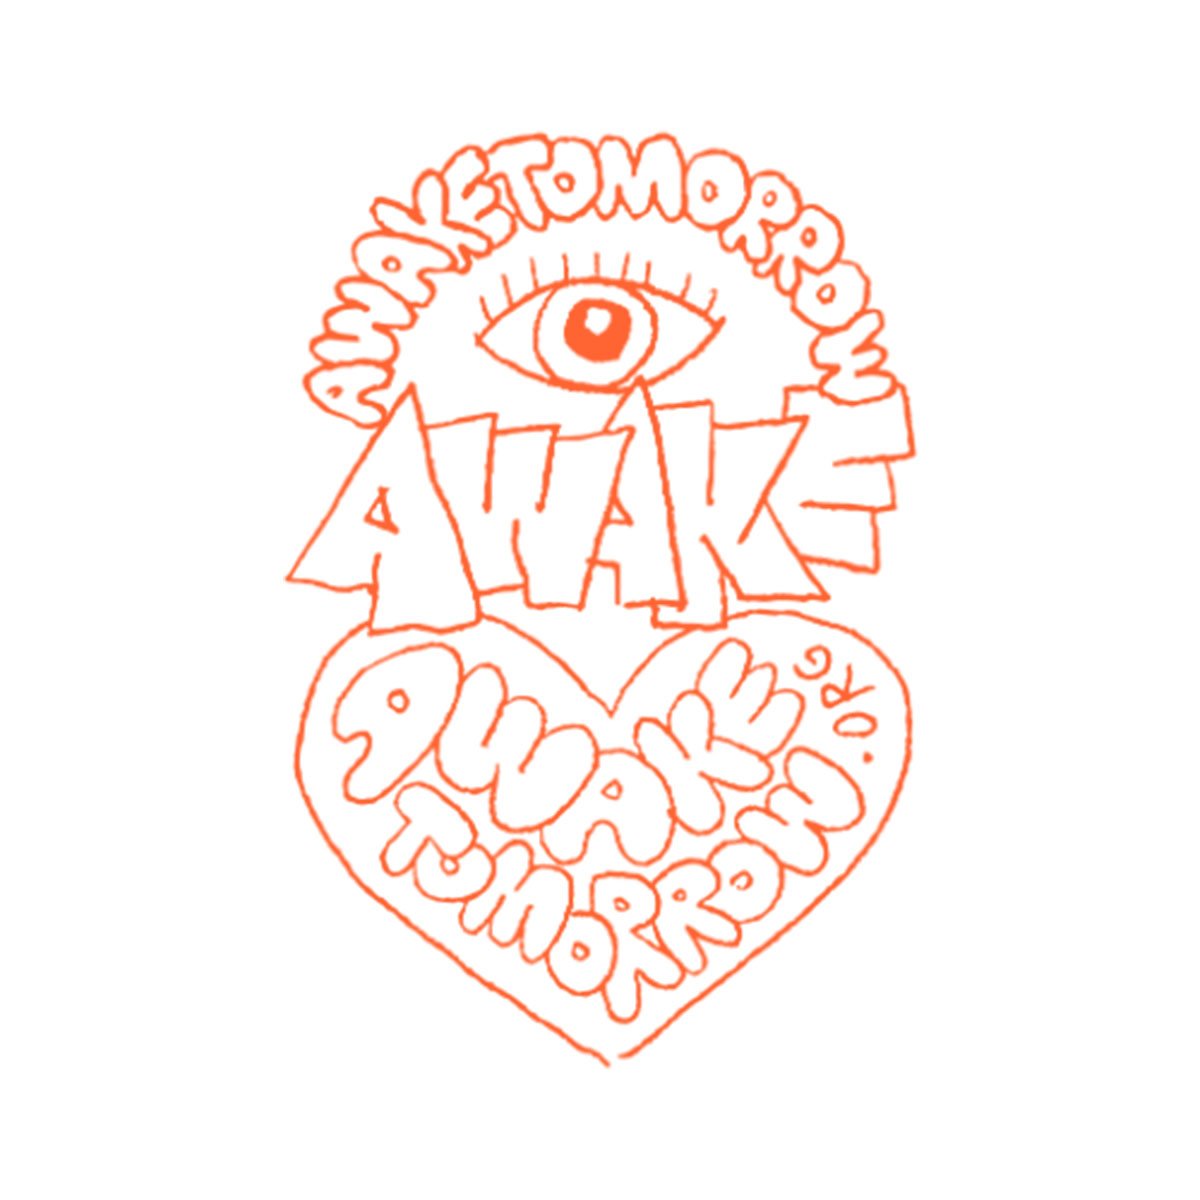 Awake Tomorrow Sticker Bundle, Pack of 6